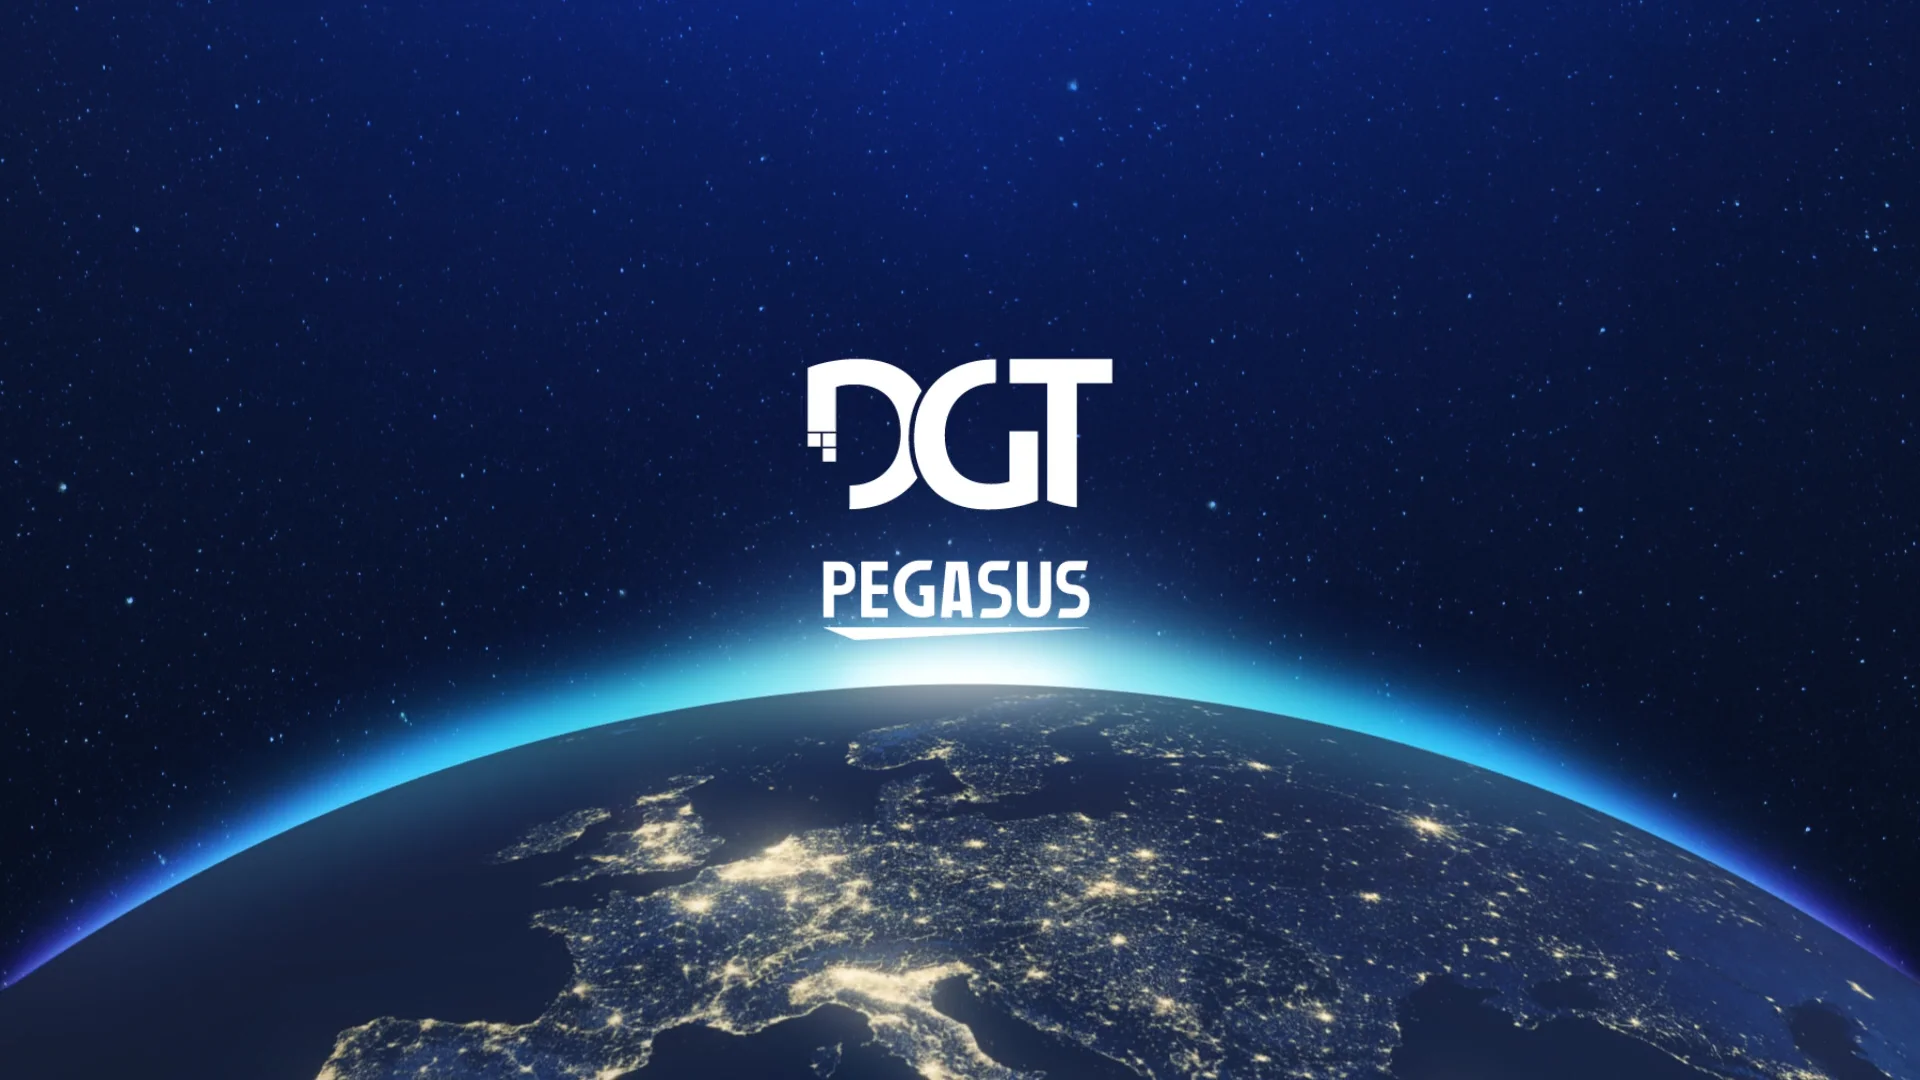 DGT Pegasus  Digital Game Technology